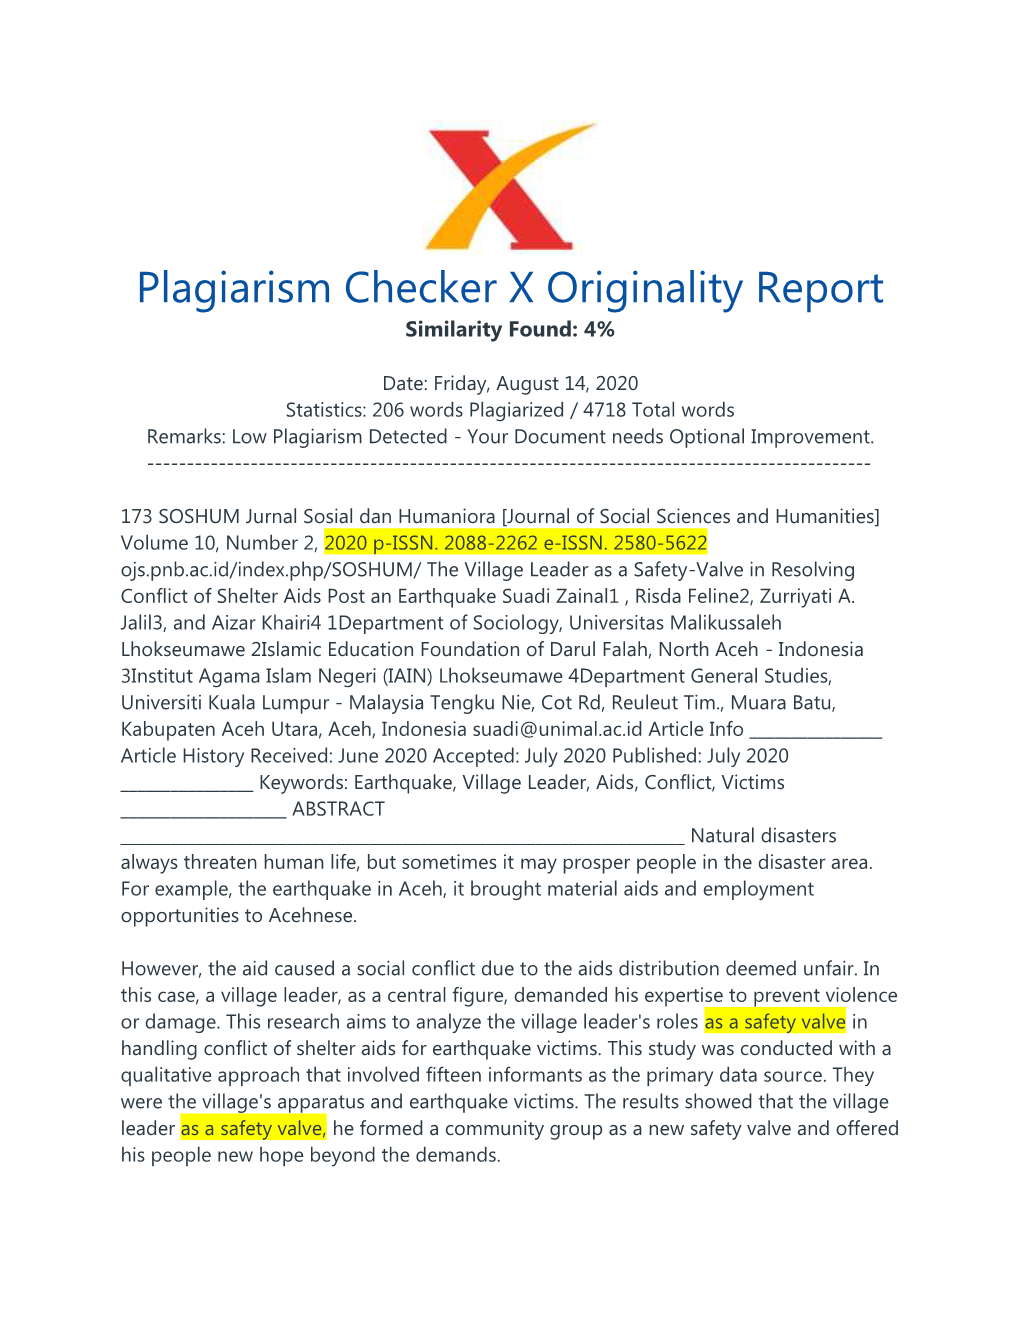 Plagiarism Checker X Originality Report Similarity Found: 4%